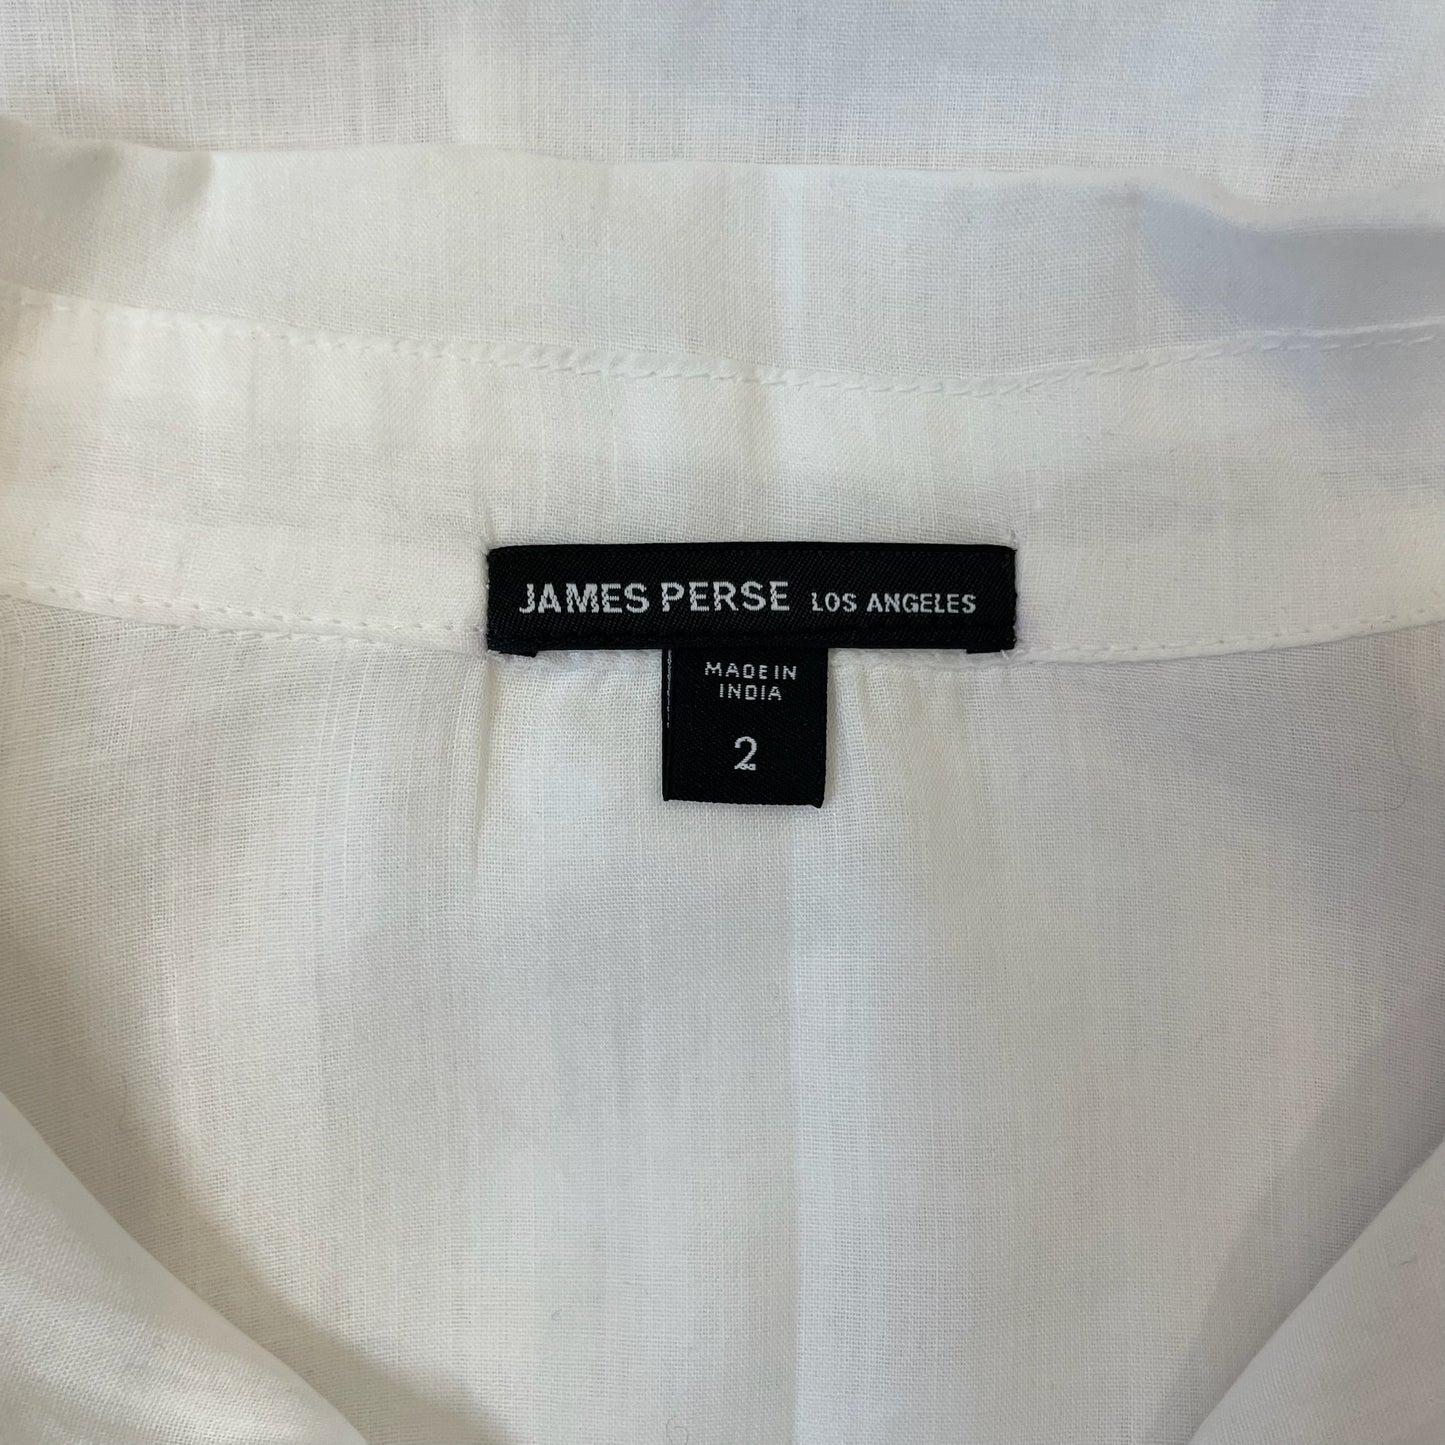 White Short-Sleeves Shirt - S/M